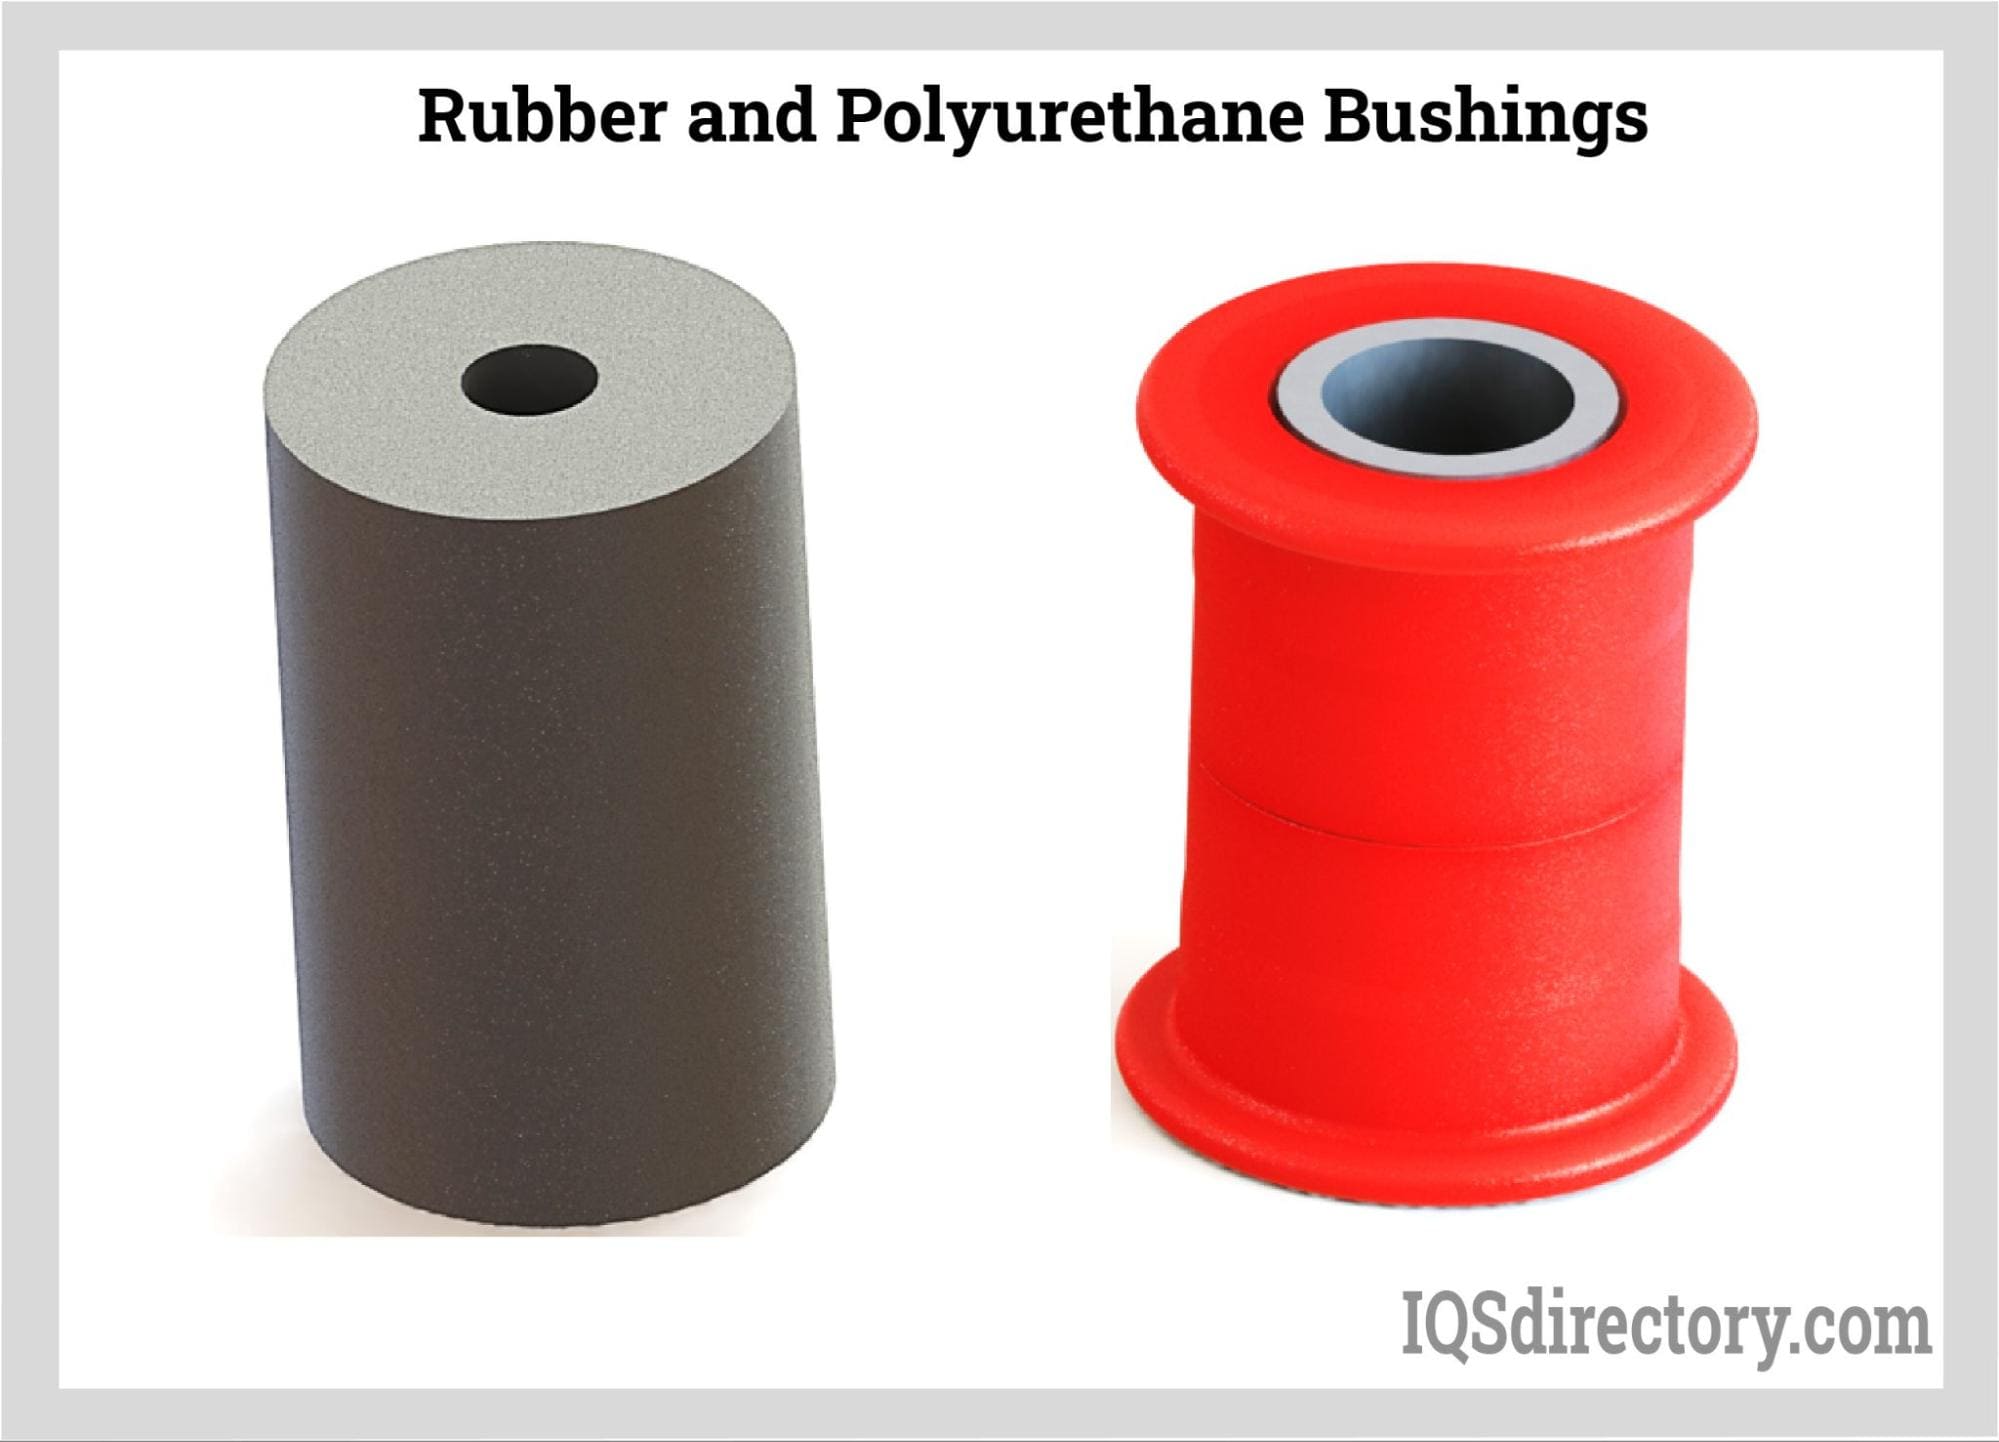 Rubber and Polyurethane Bushings